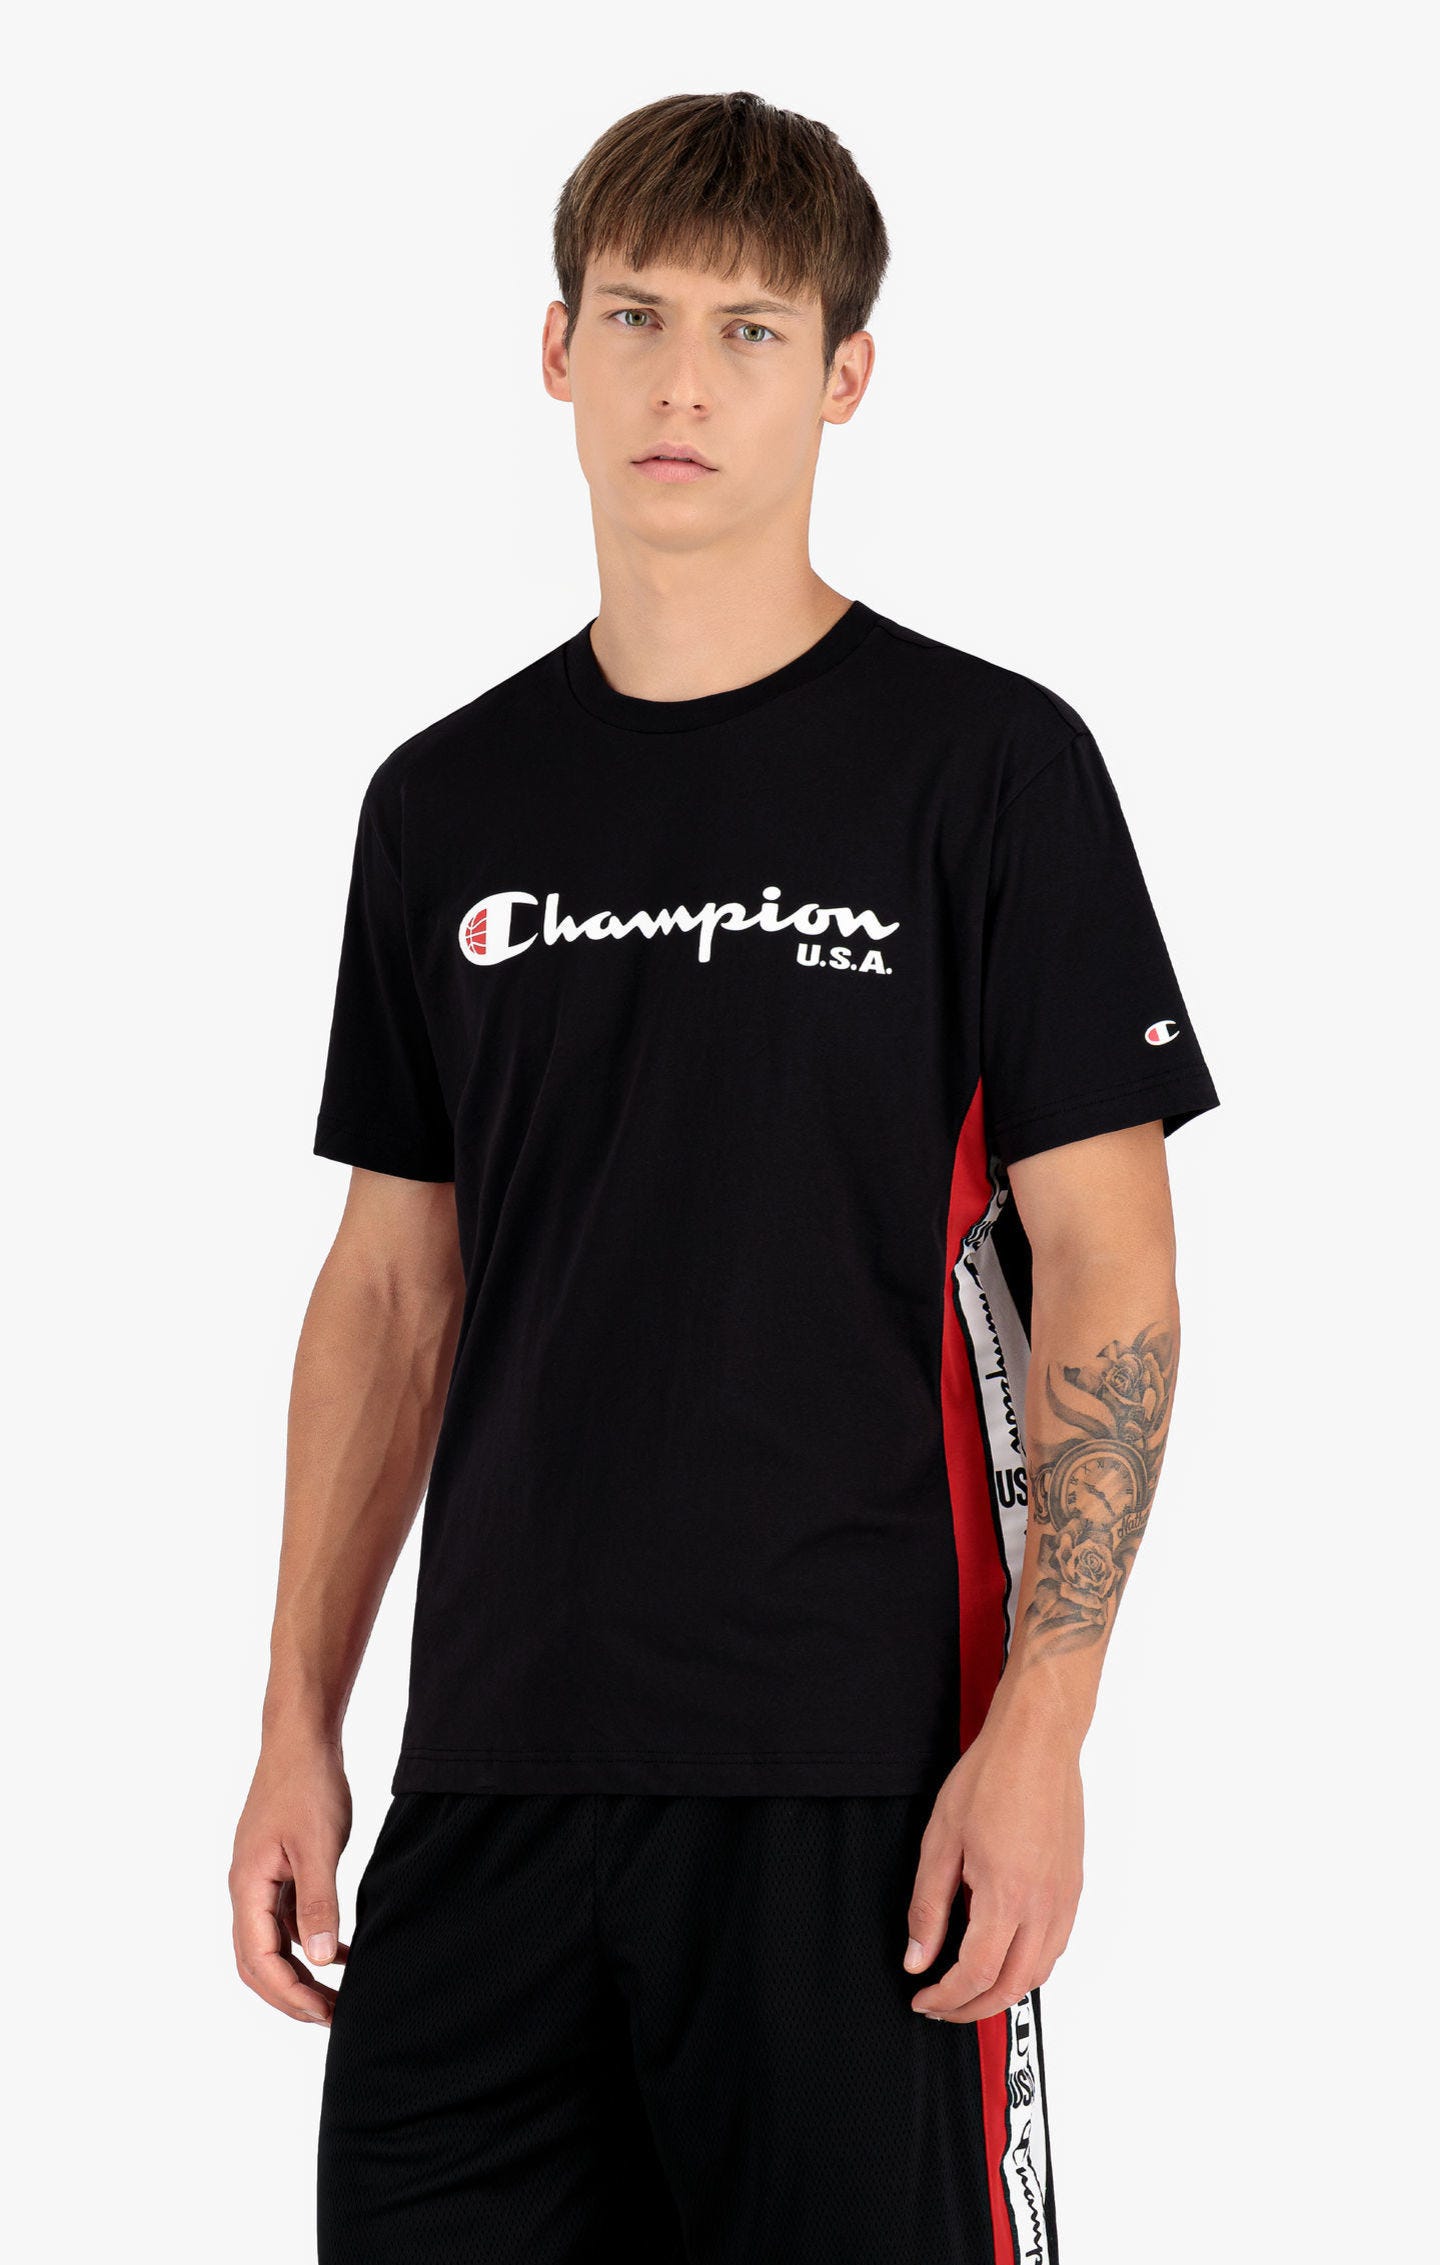 T-shirt à bandes logo Champion USA